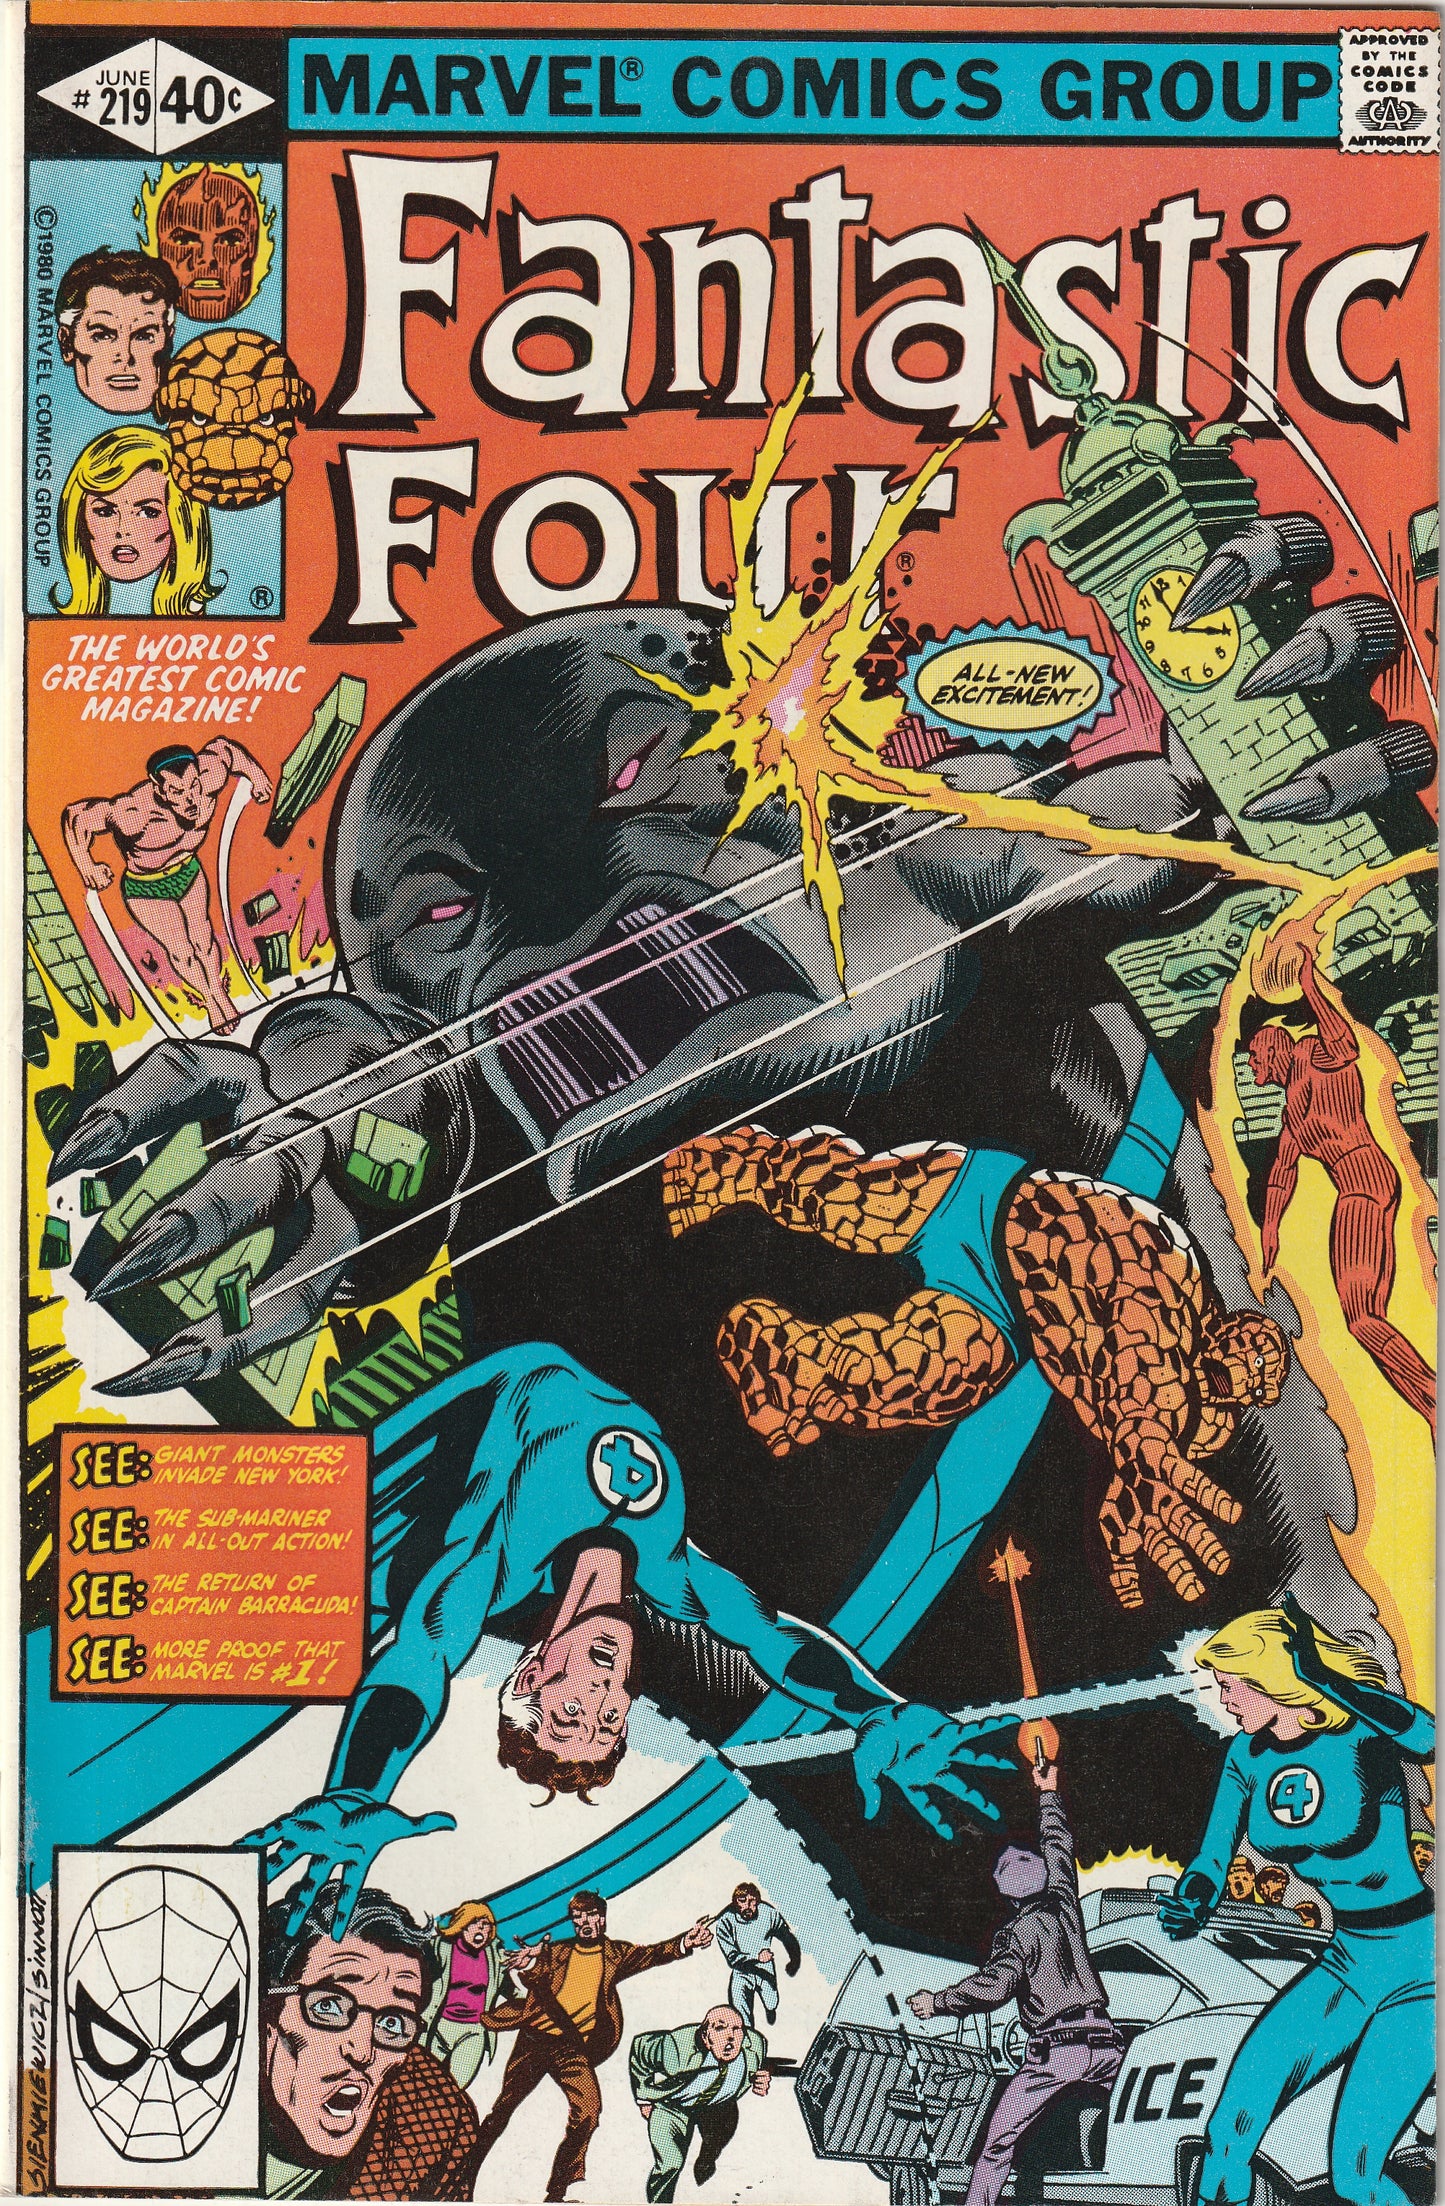 Fantastic Four #219 (1980)